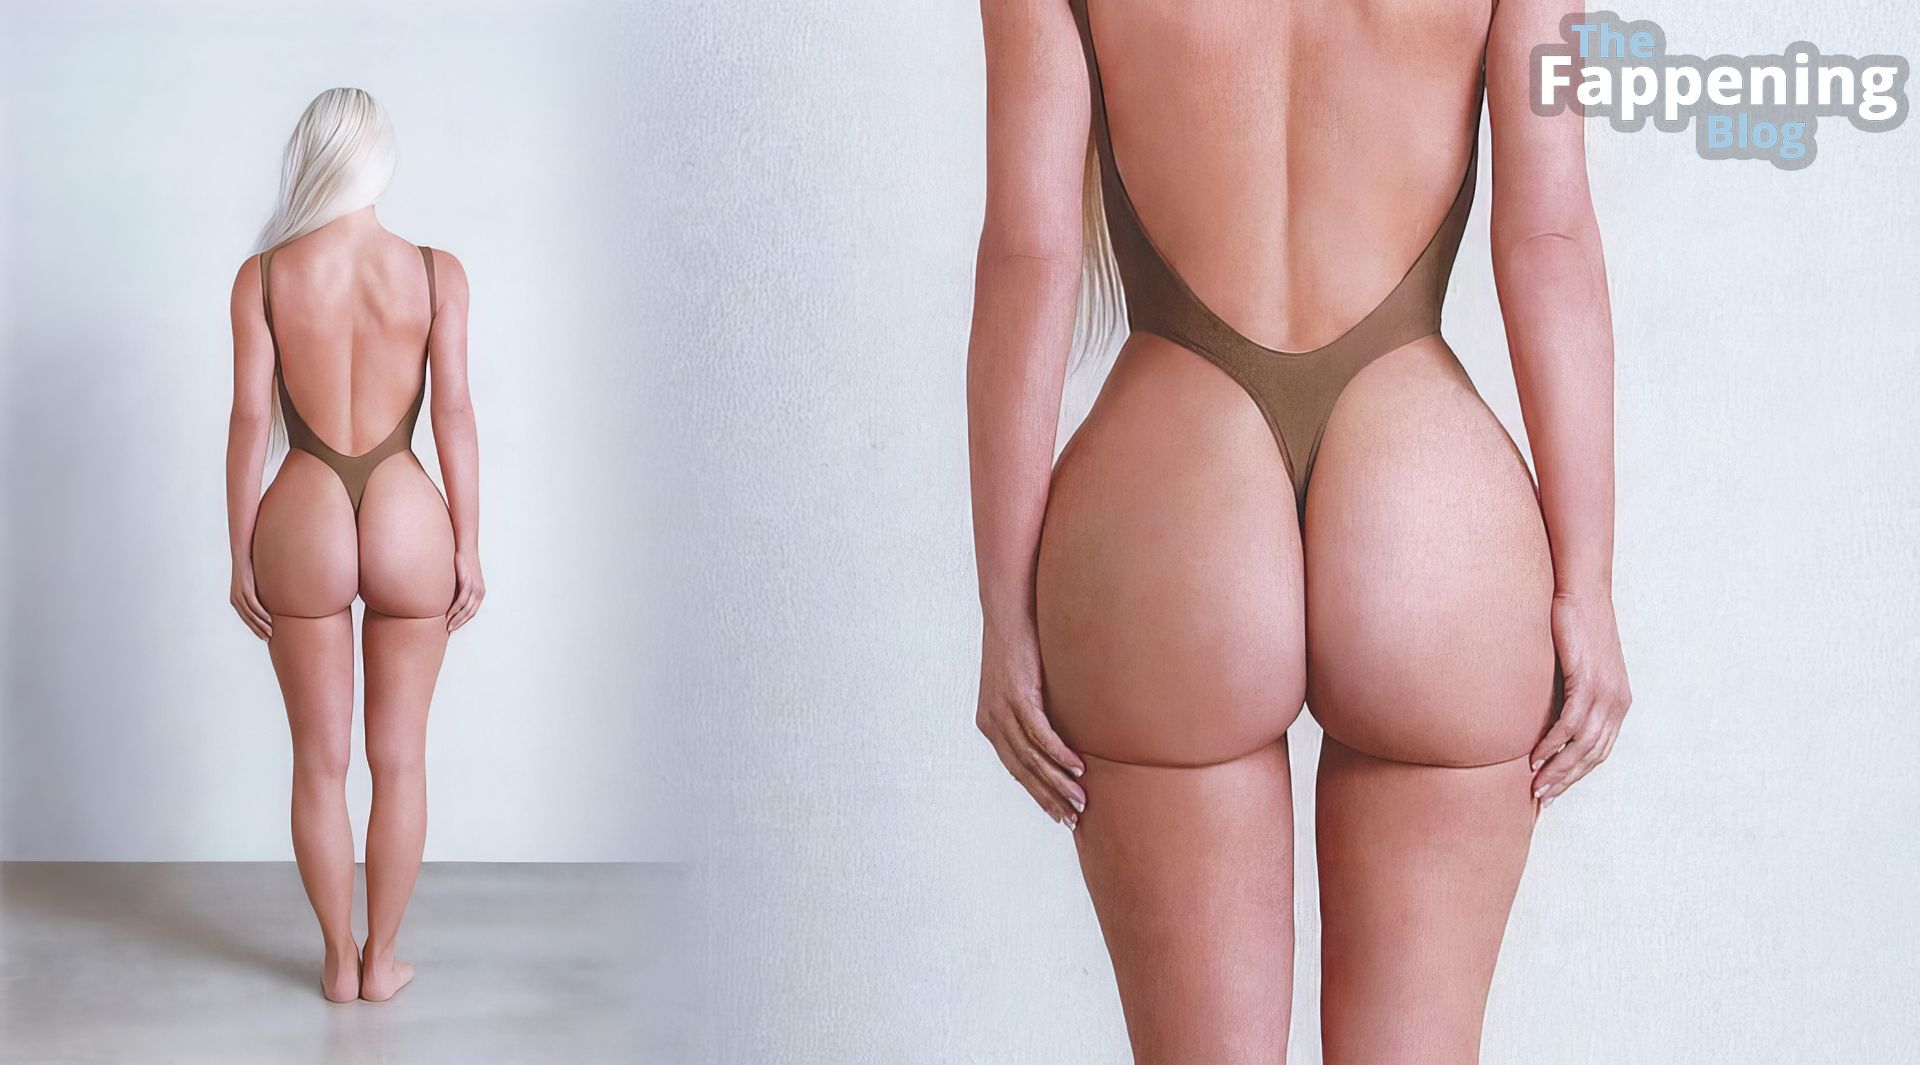 Kim Kardashian Displays Her Sexy Curves in a Promo Shoot (5 Photos)